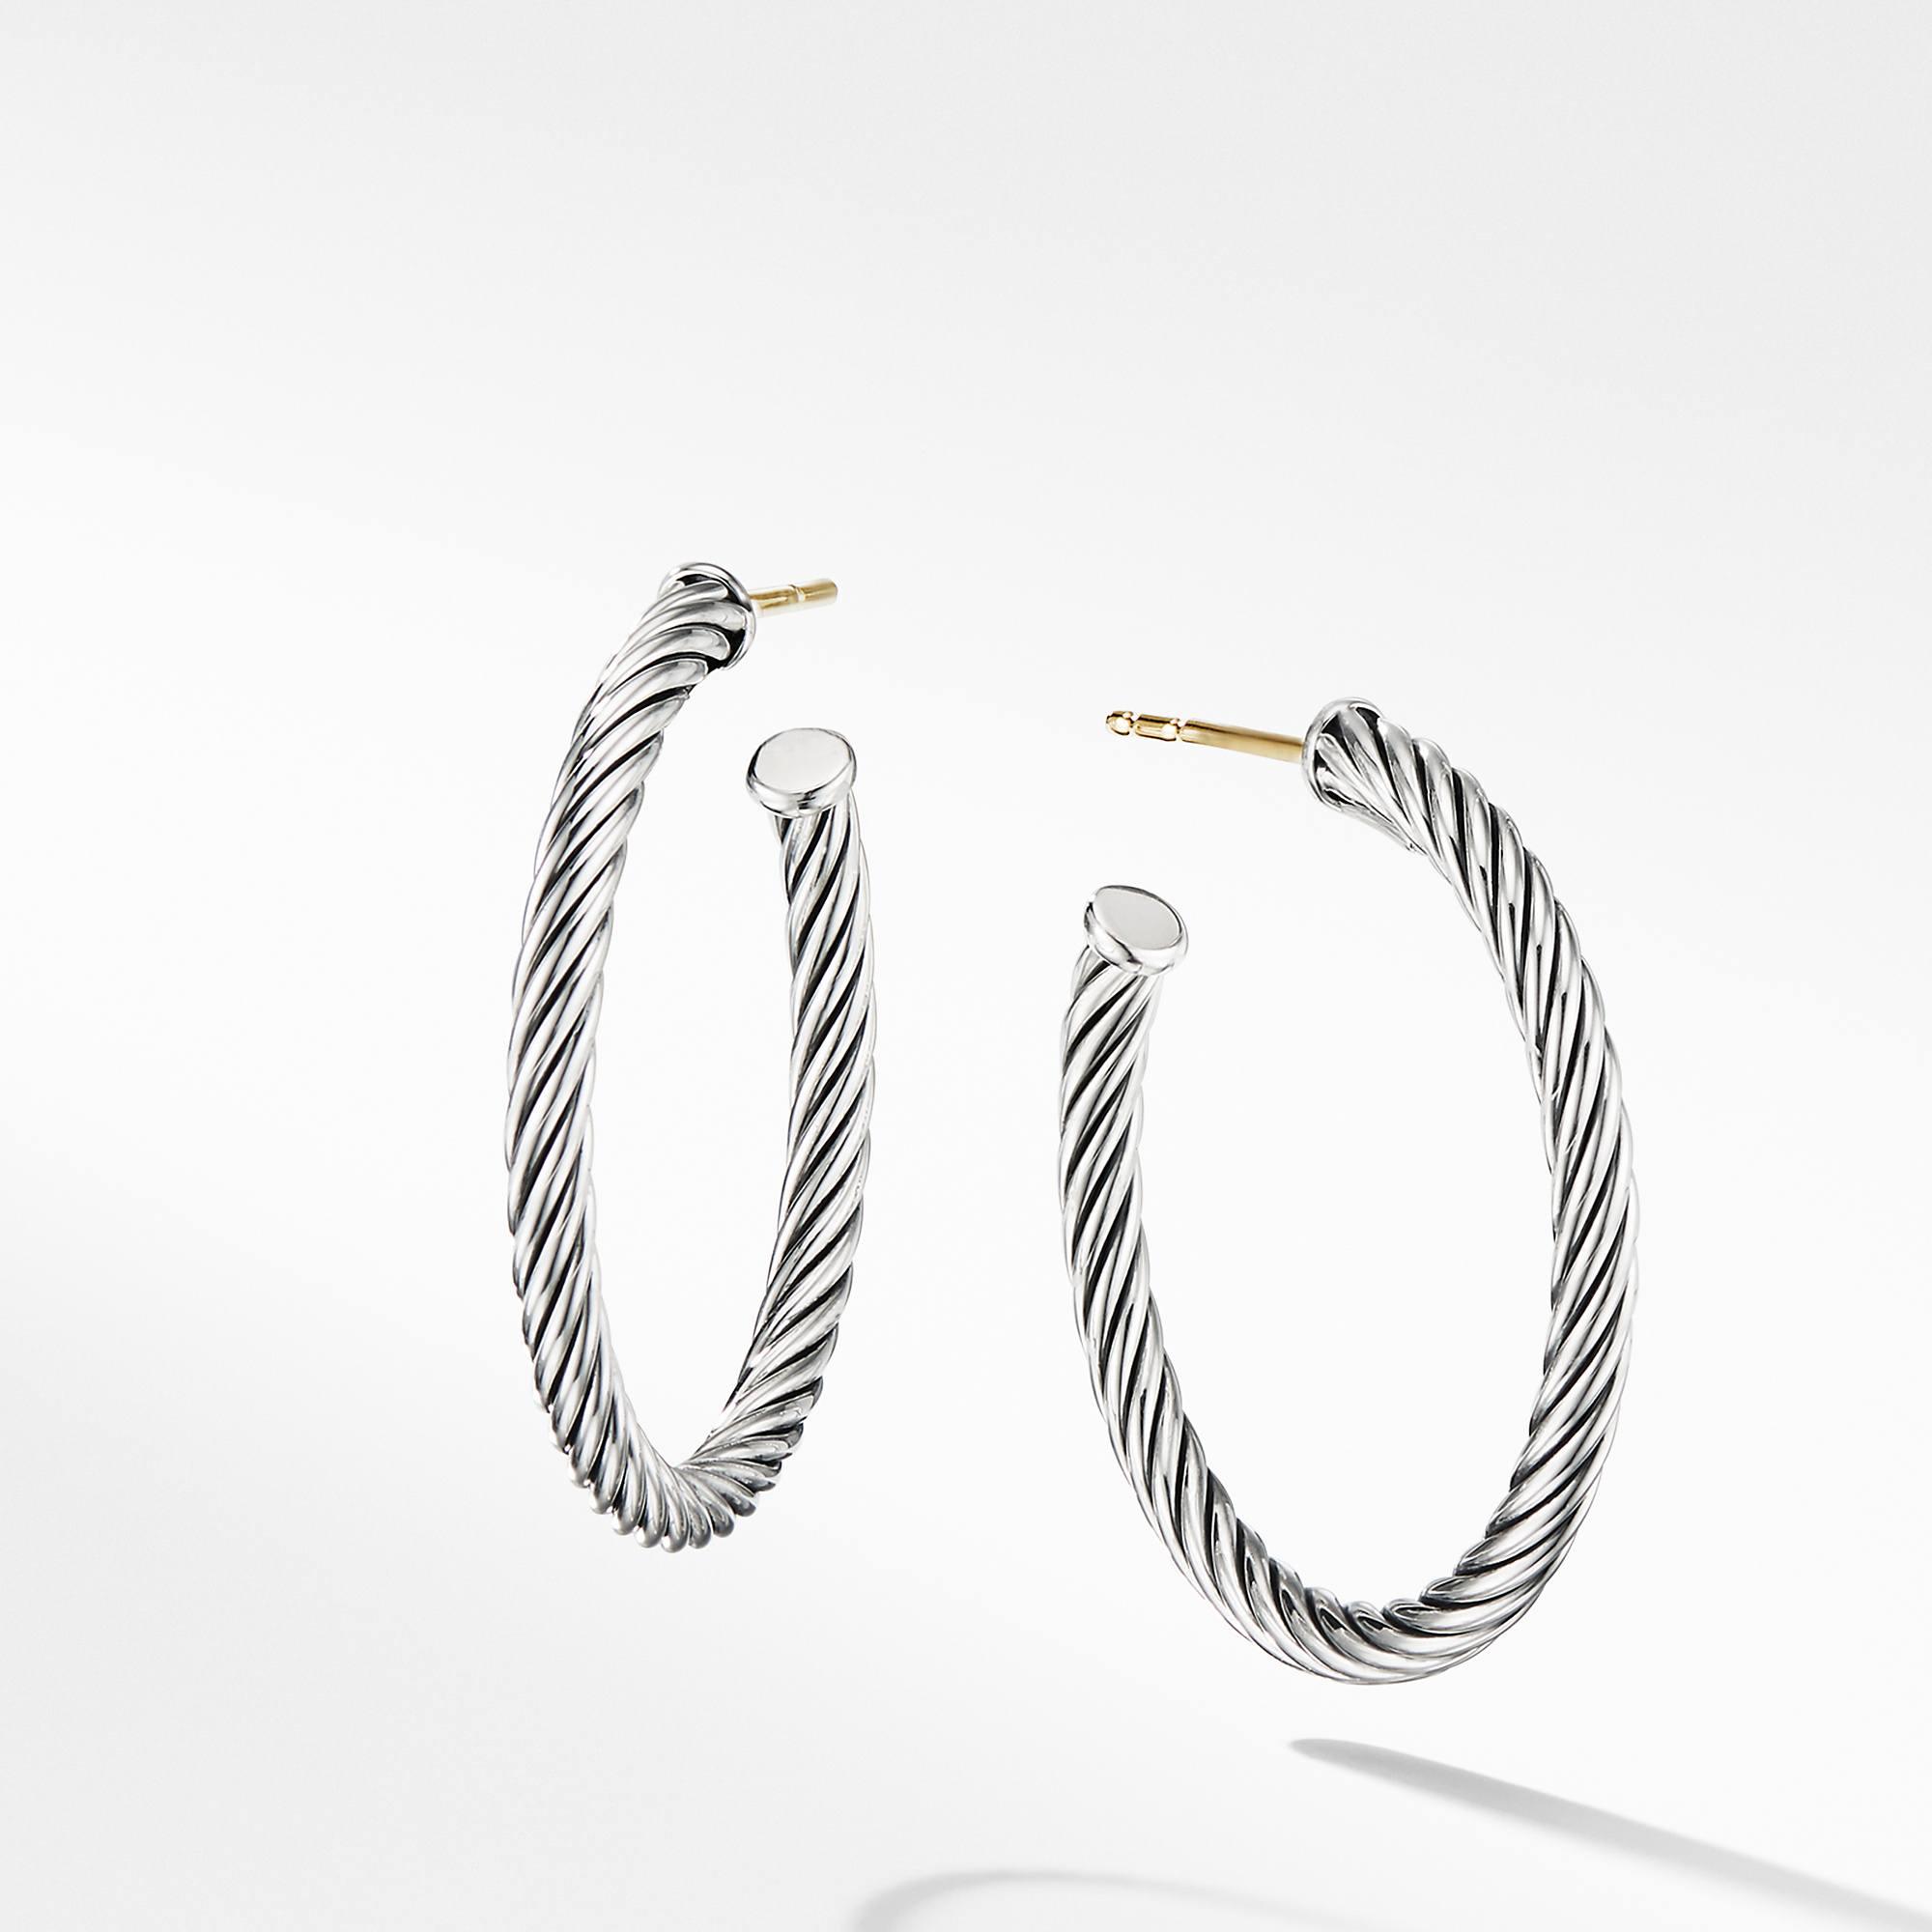 David Yurman Classic Cable Hoop Earrings in Sterling Silver